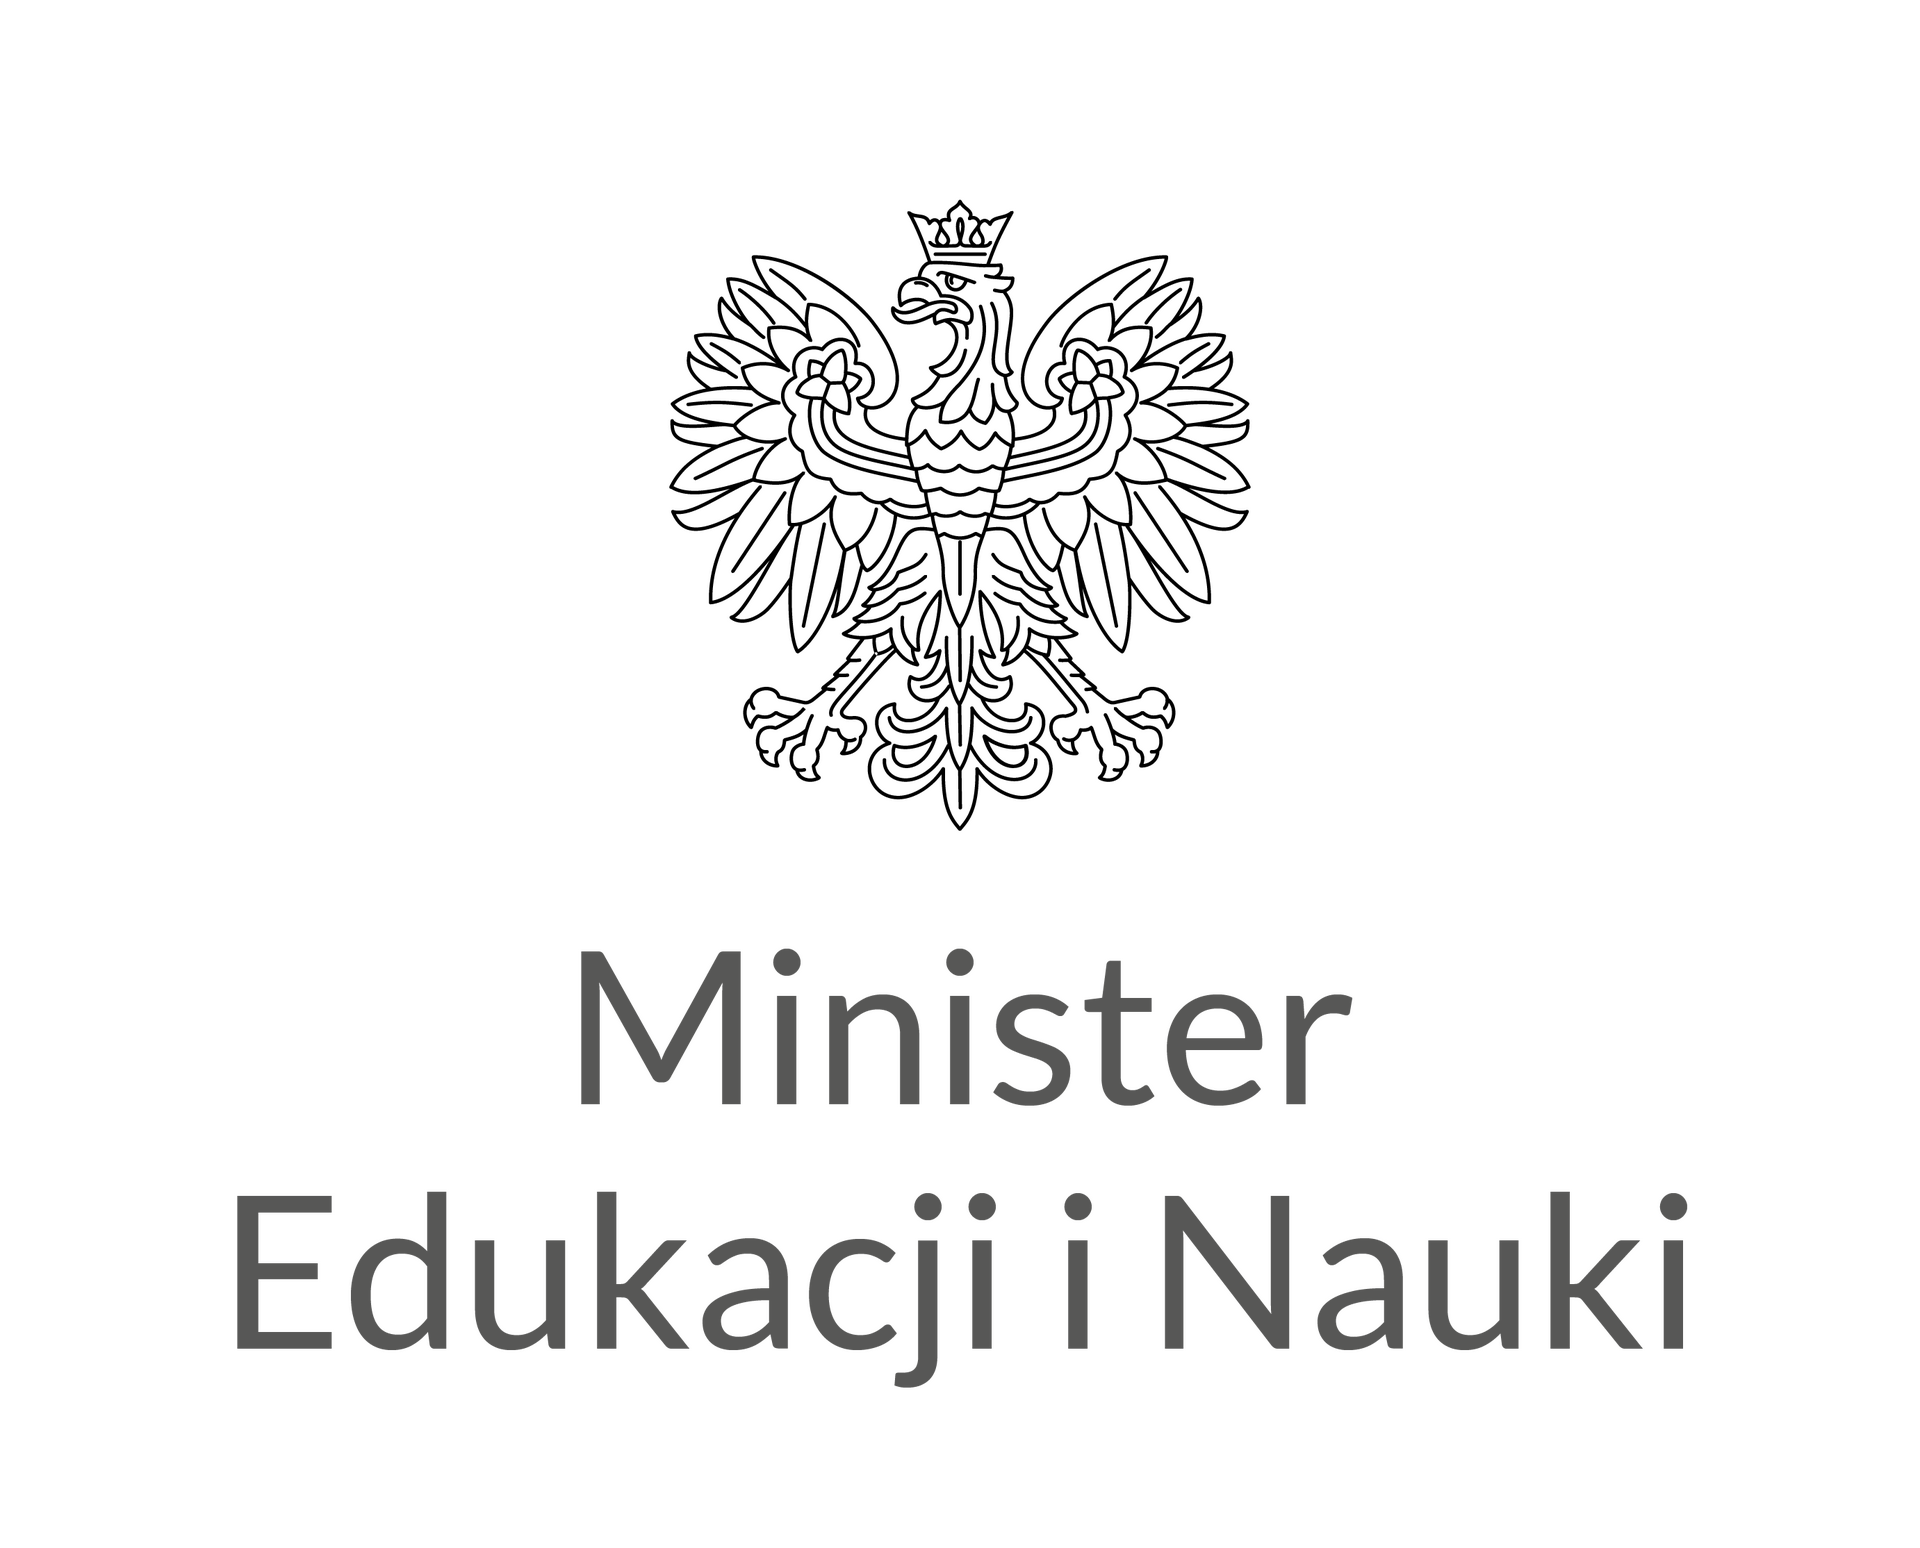 logo_minister_pion_pl.png